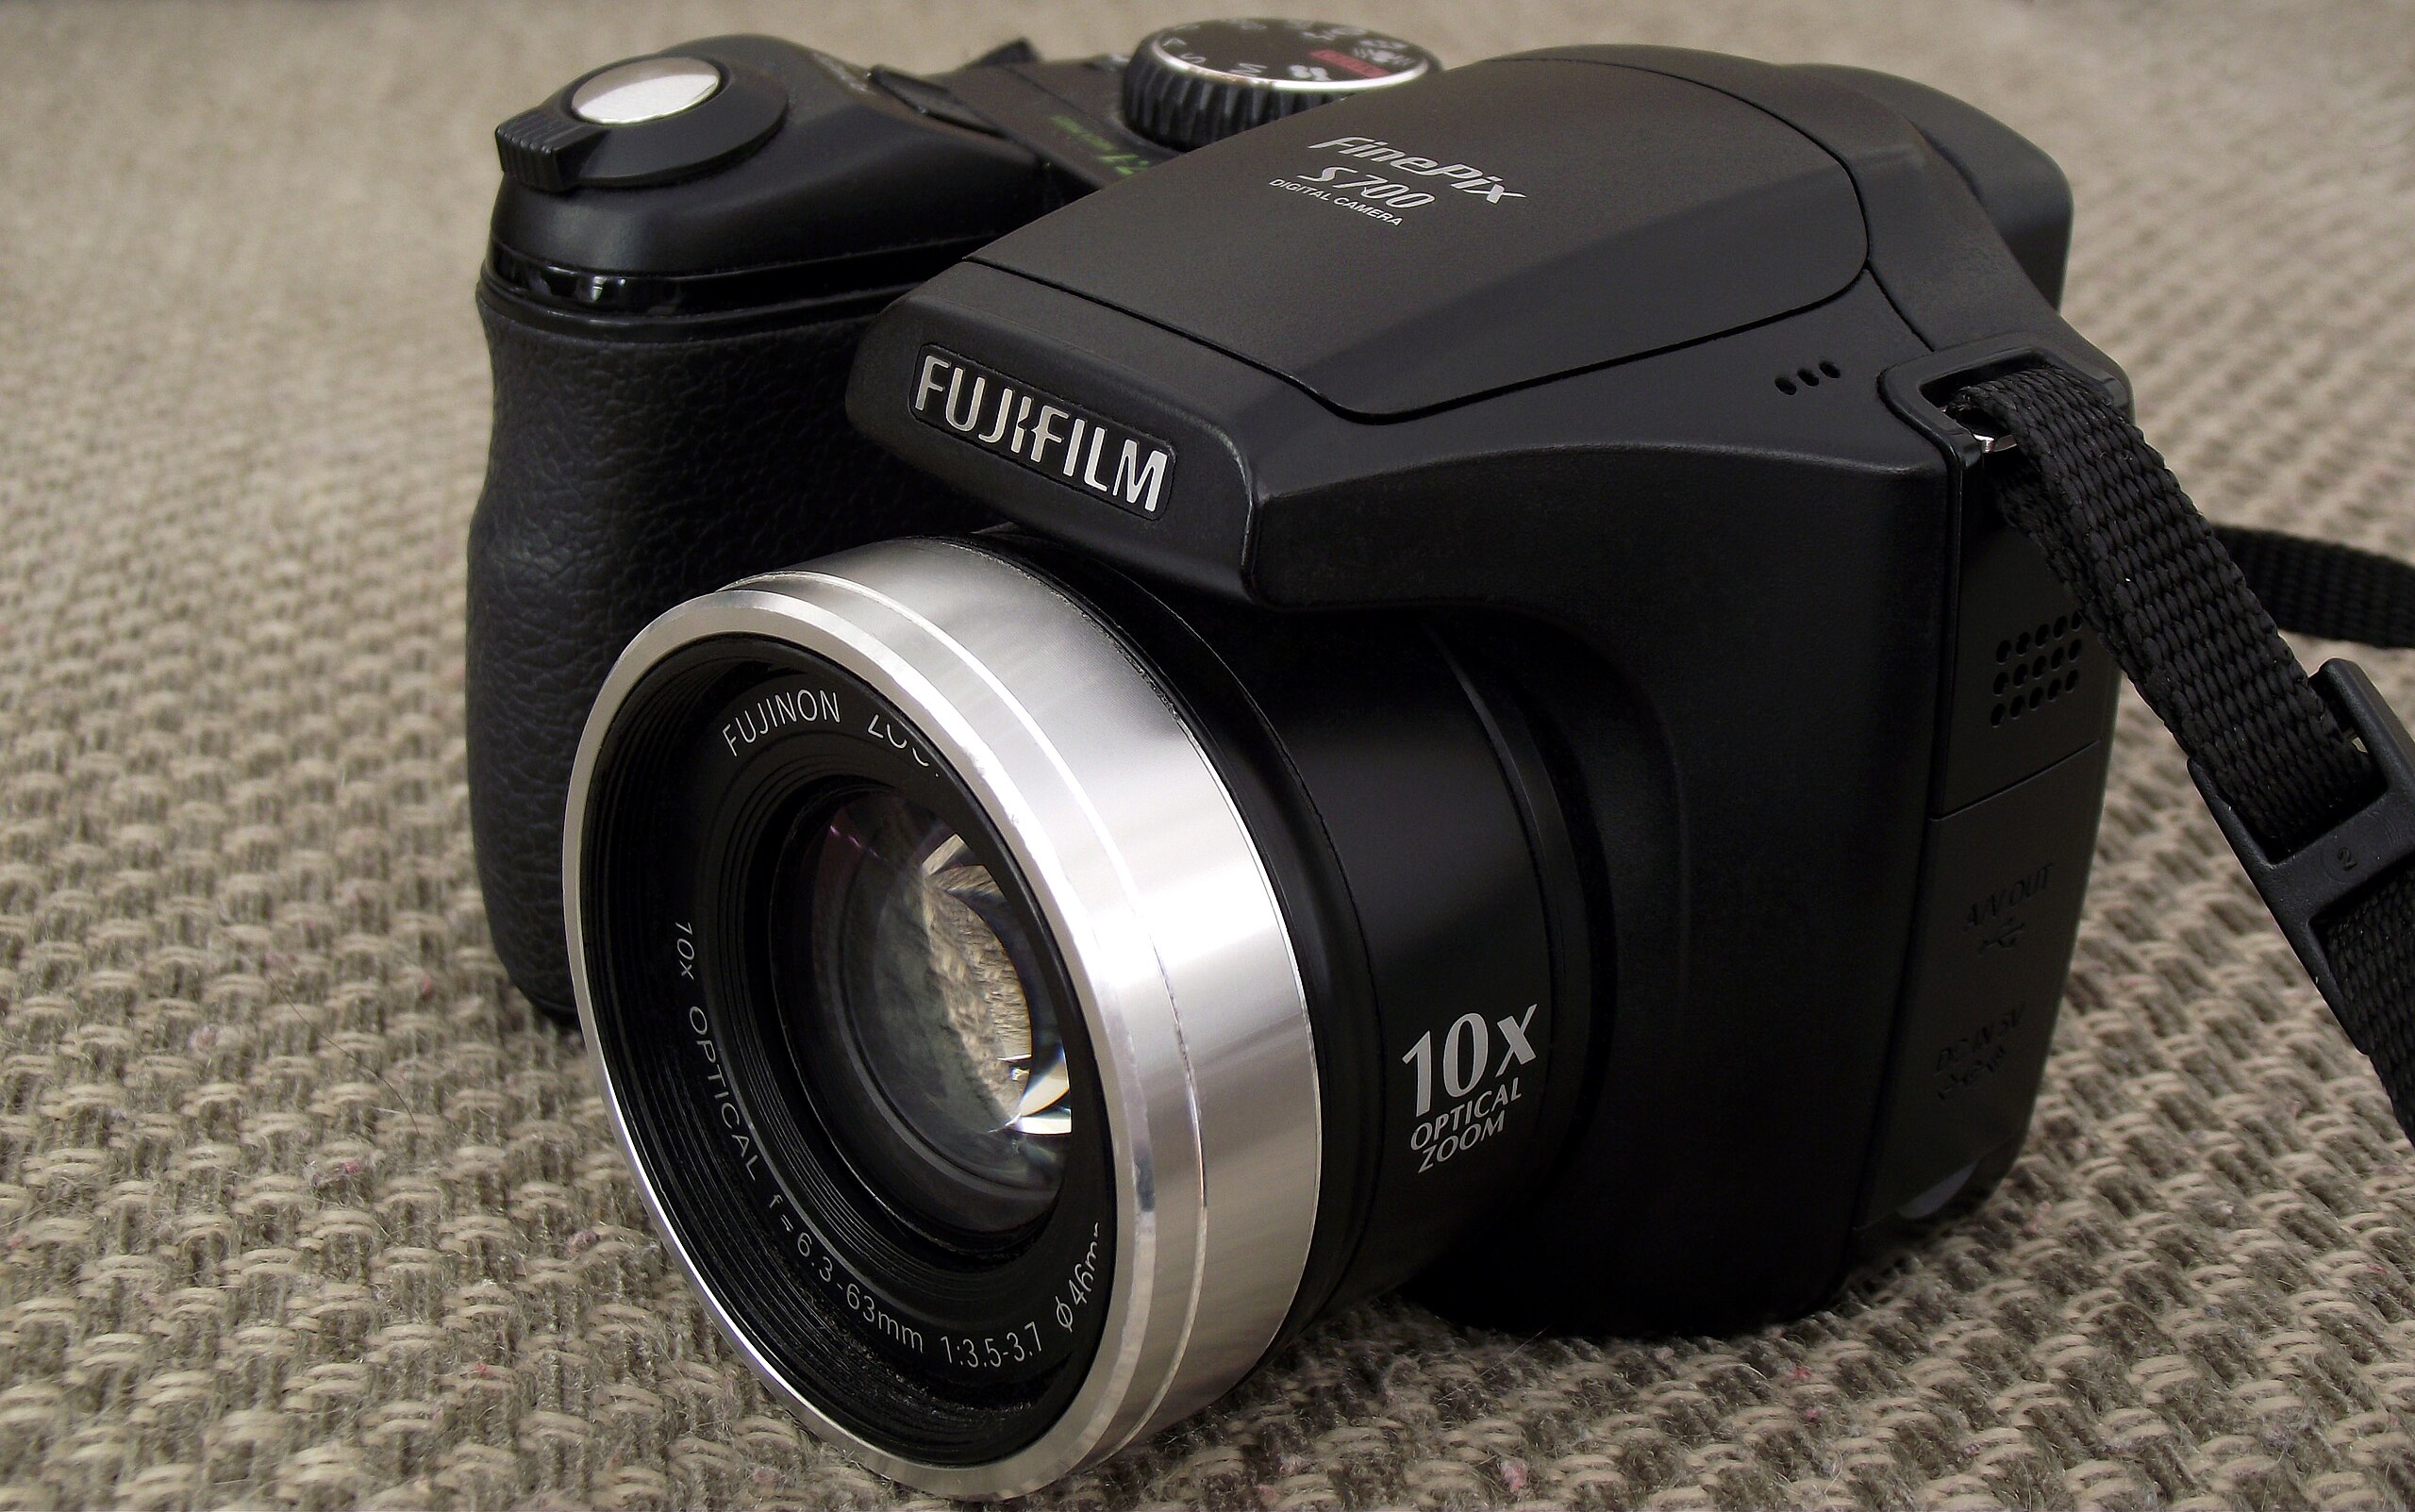 File:Fujifilm FinePix S700.jpg - Commons